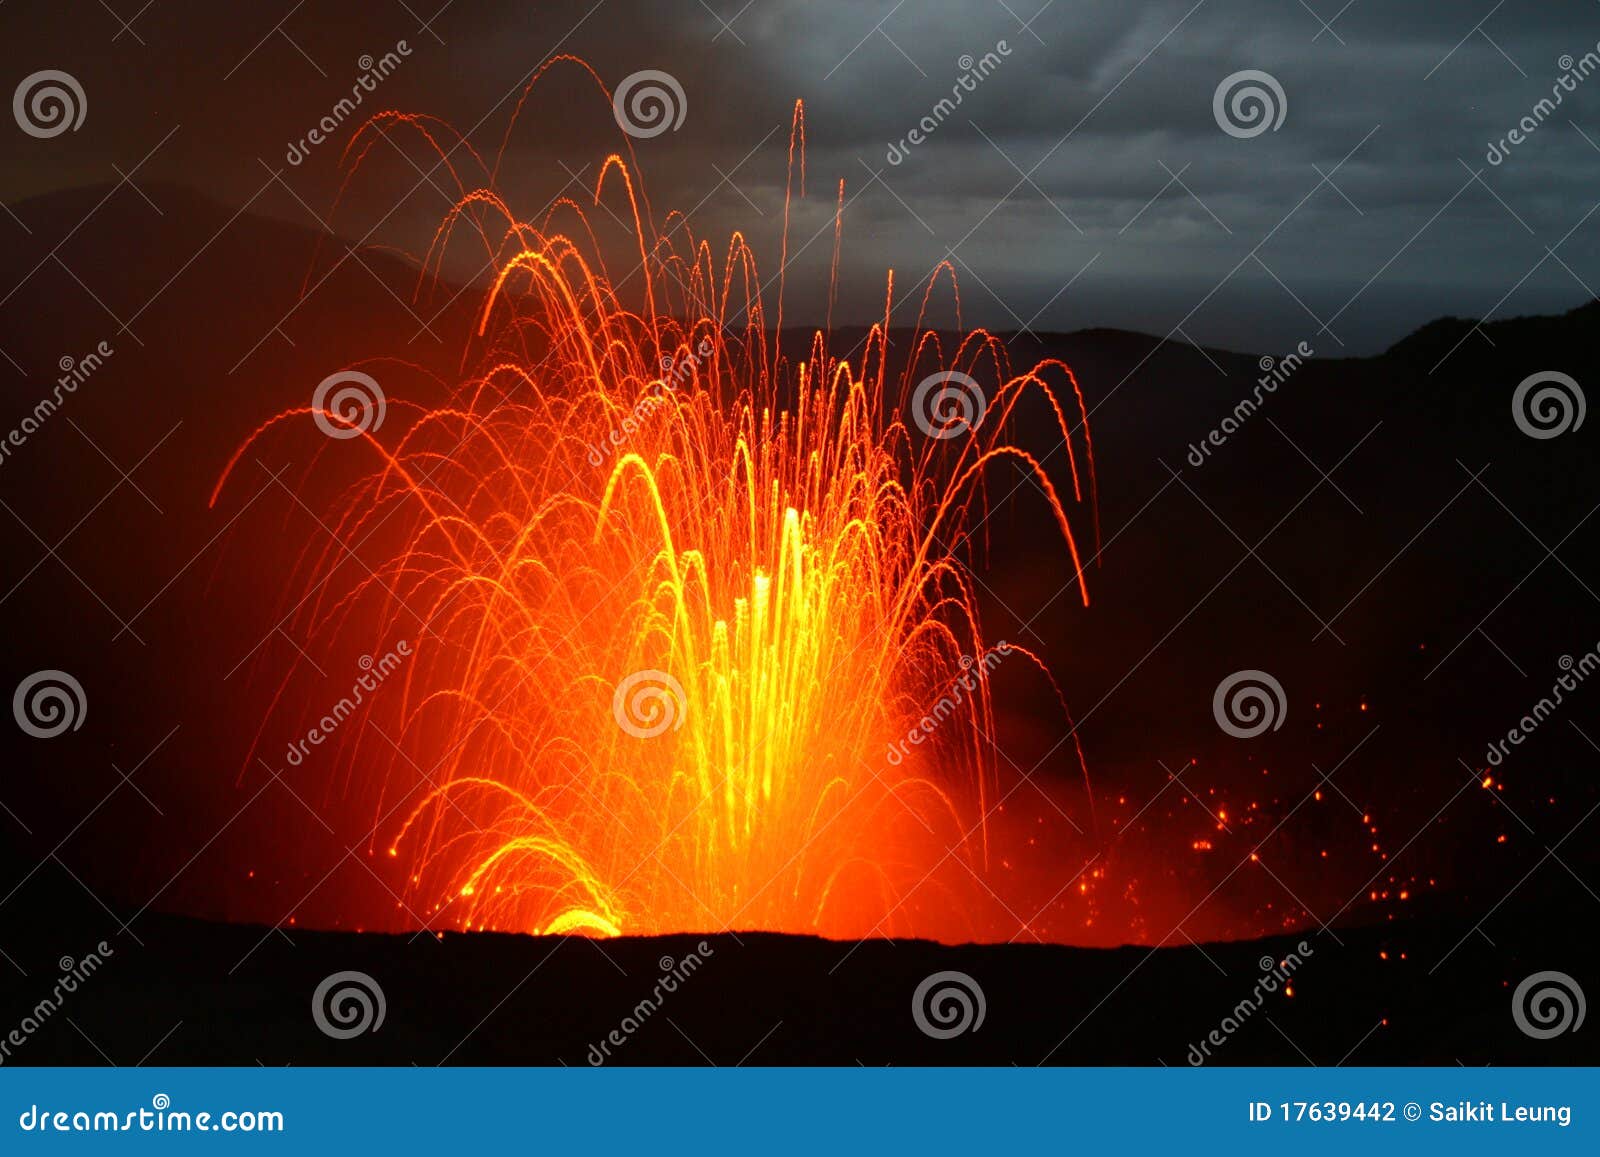 volcano eruption in vanuatu, south pacific